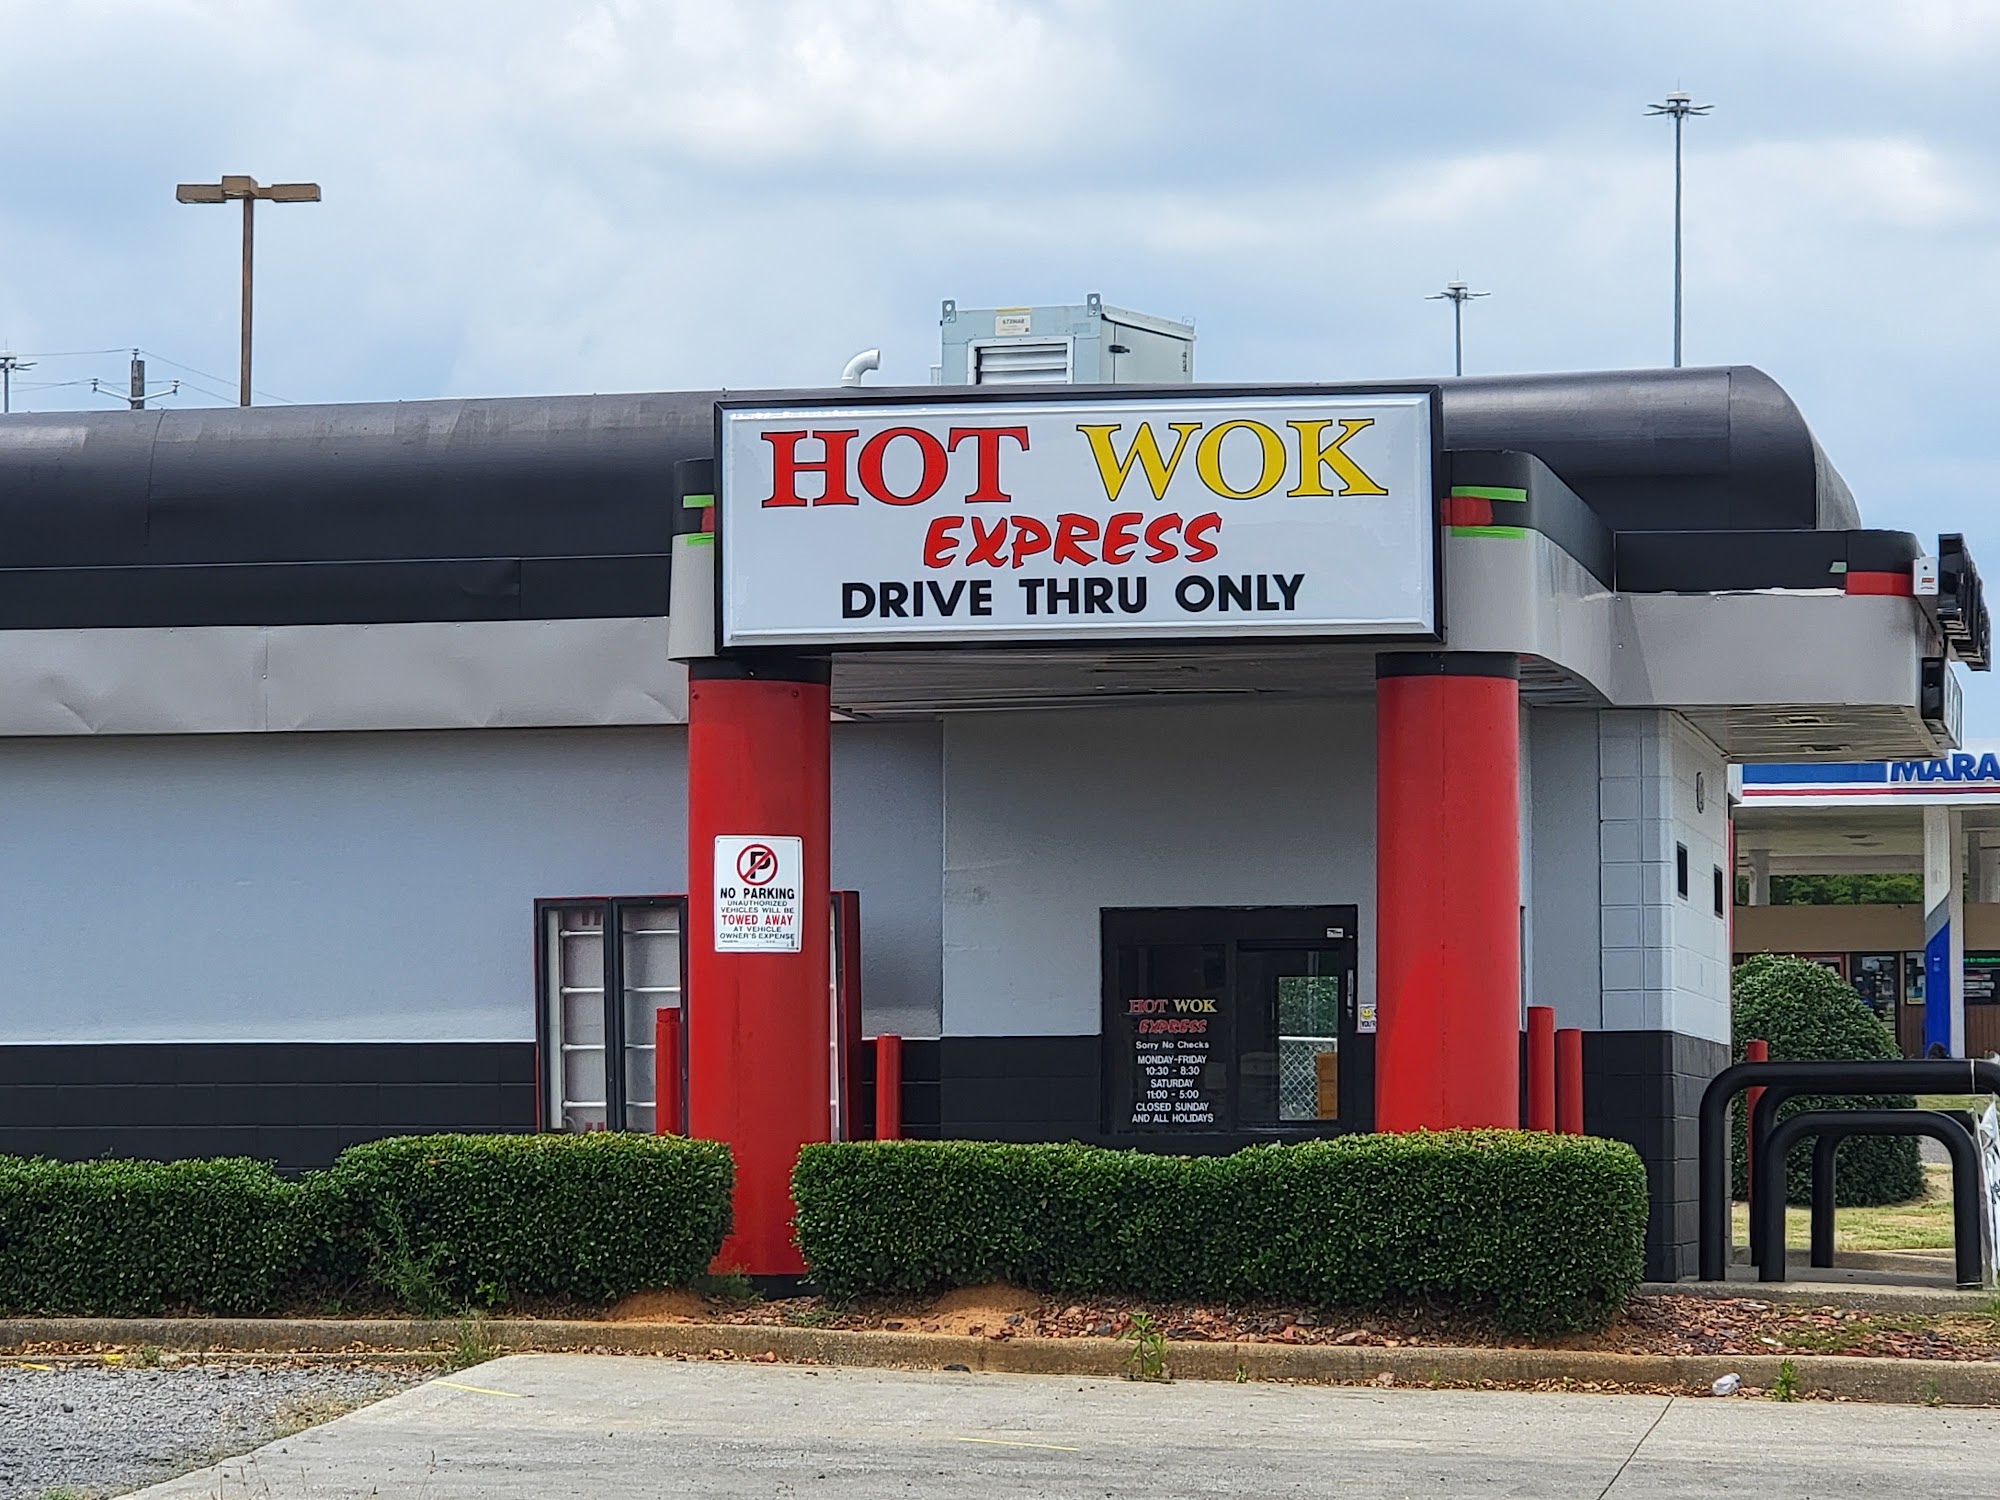 Hot wok express 4300 McFarland Blvd E, Tuscaloosa, AL 35405